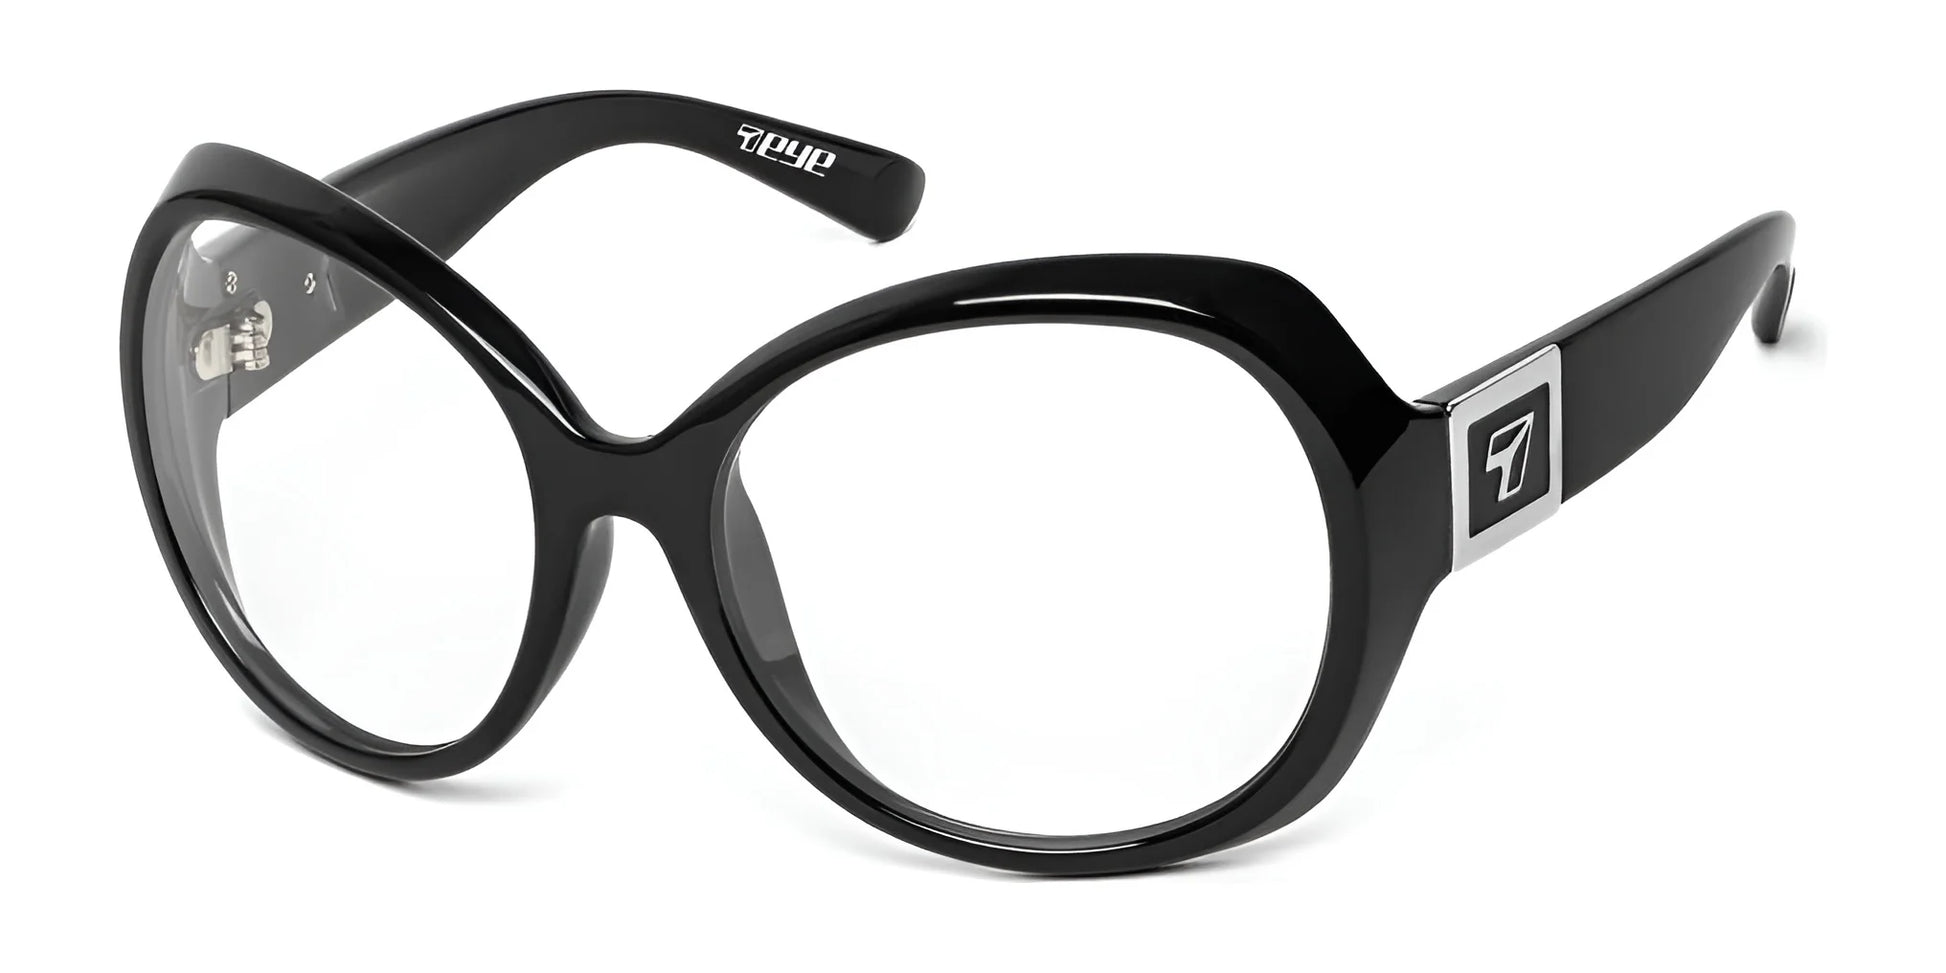 7eye Lily Sunglasses Glossy Black / Clear